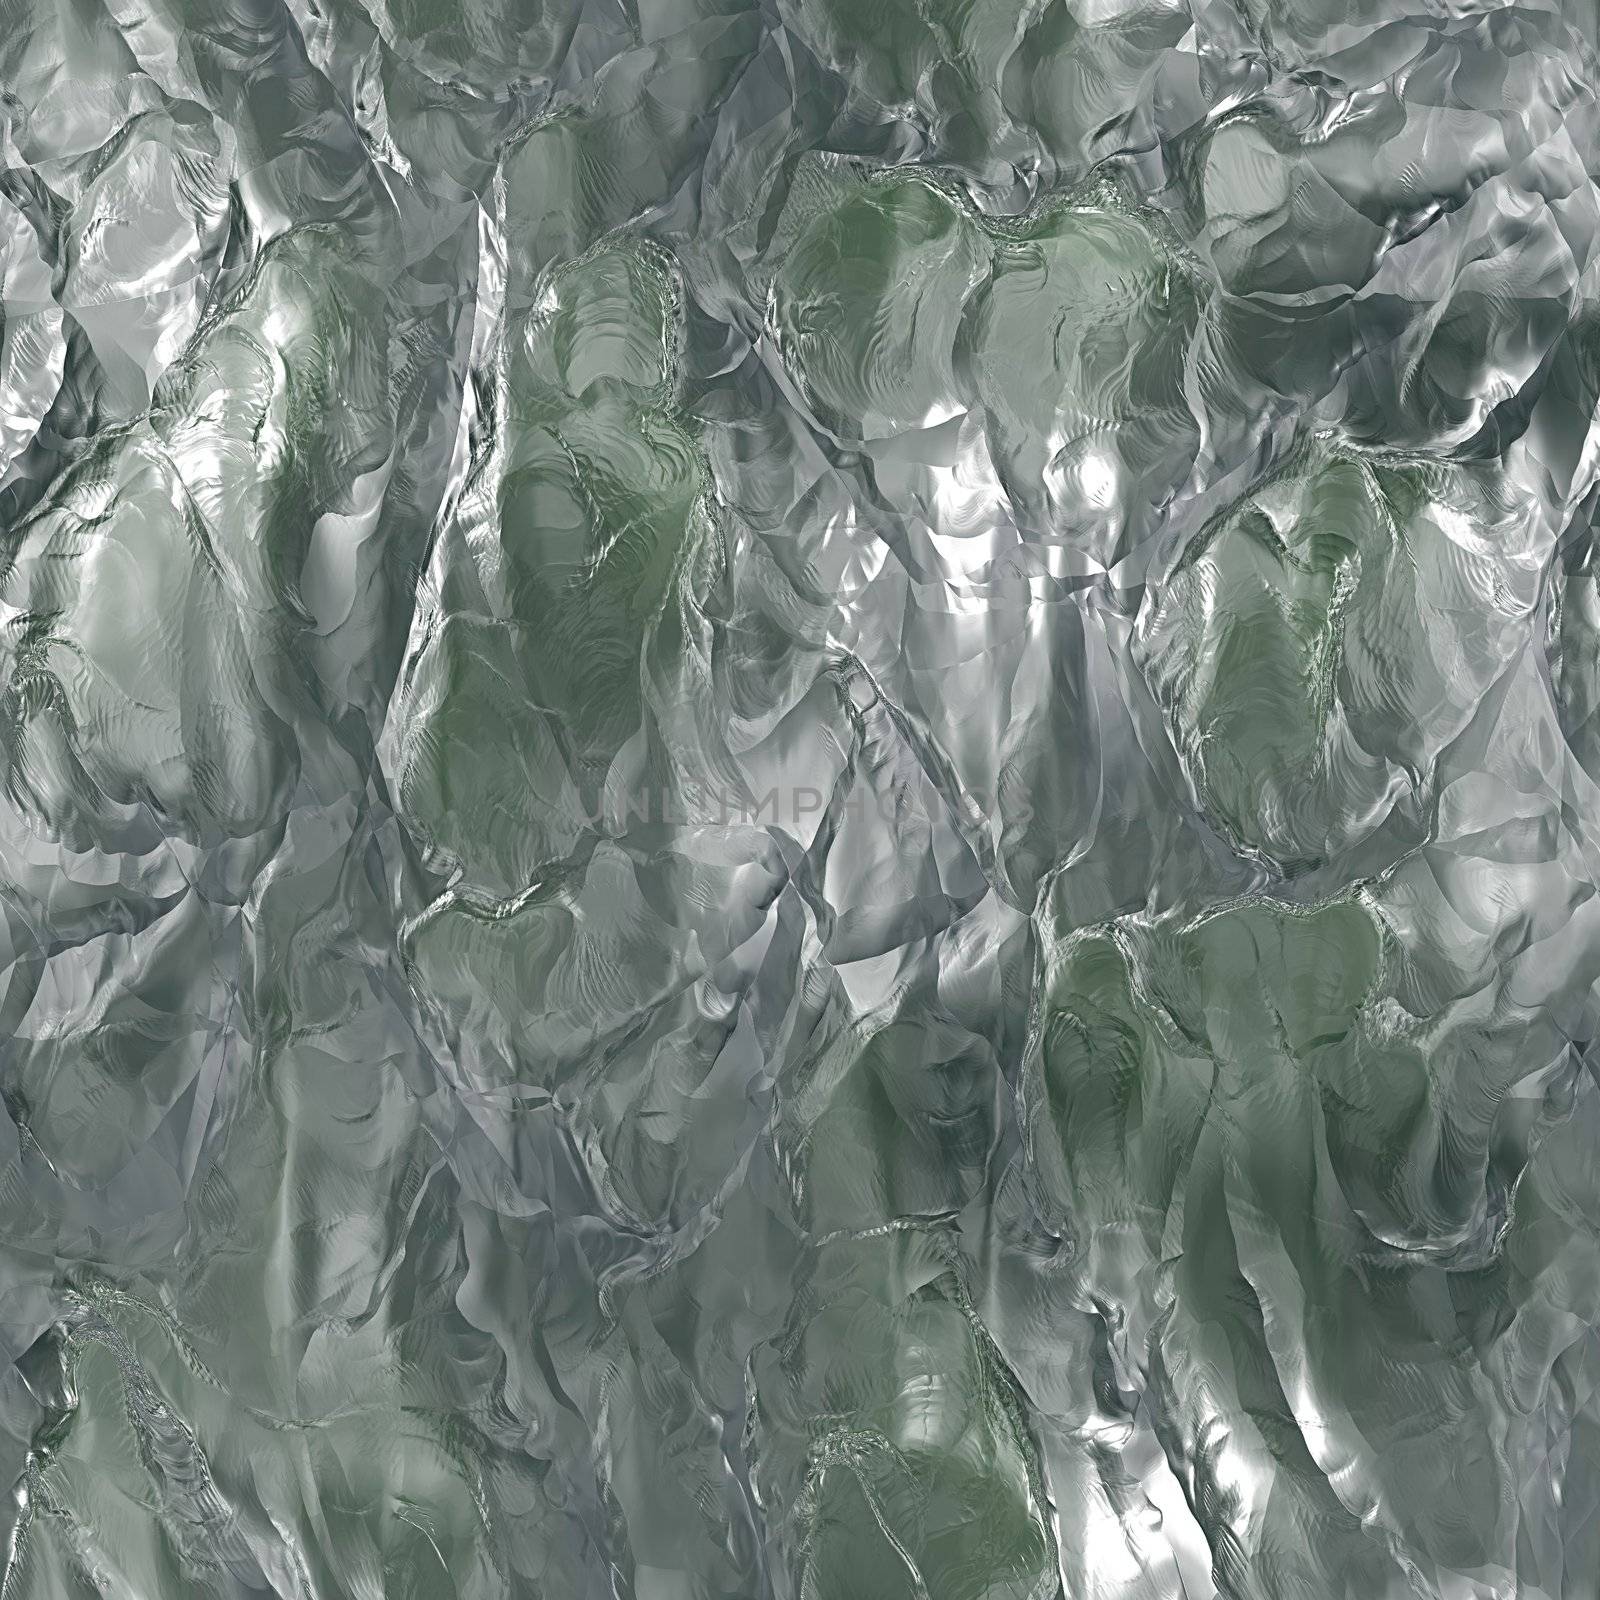 Seamless Aluminium Foil Texture as a Abstract